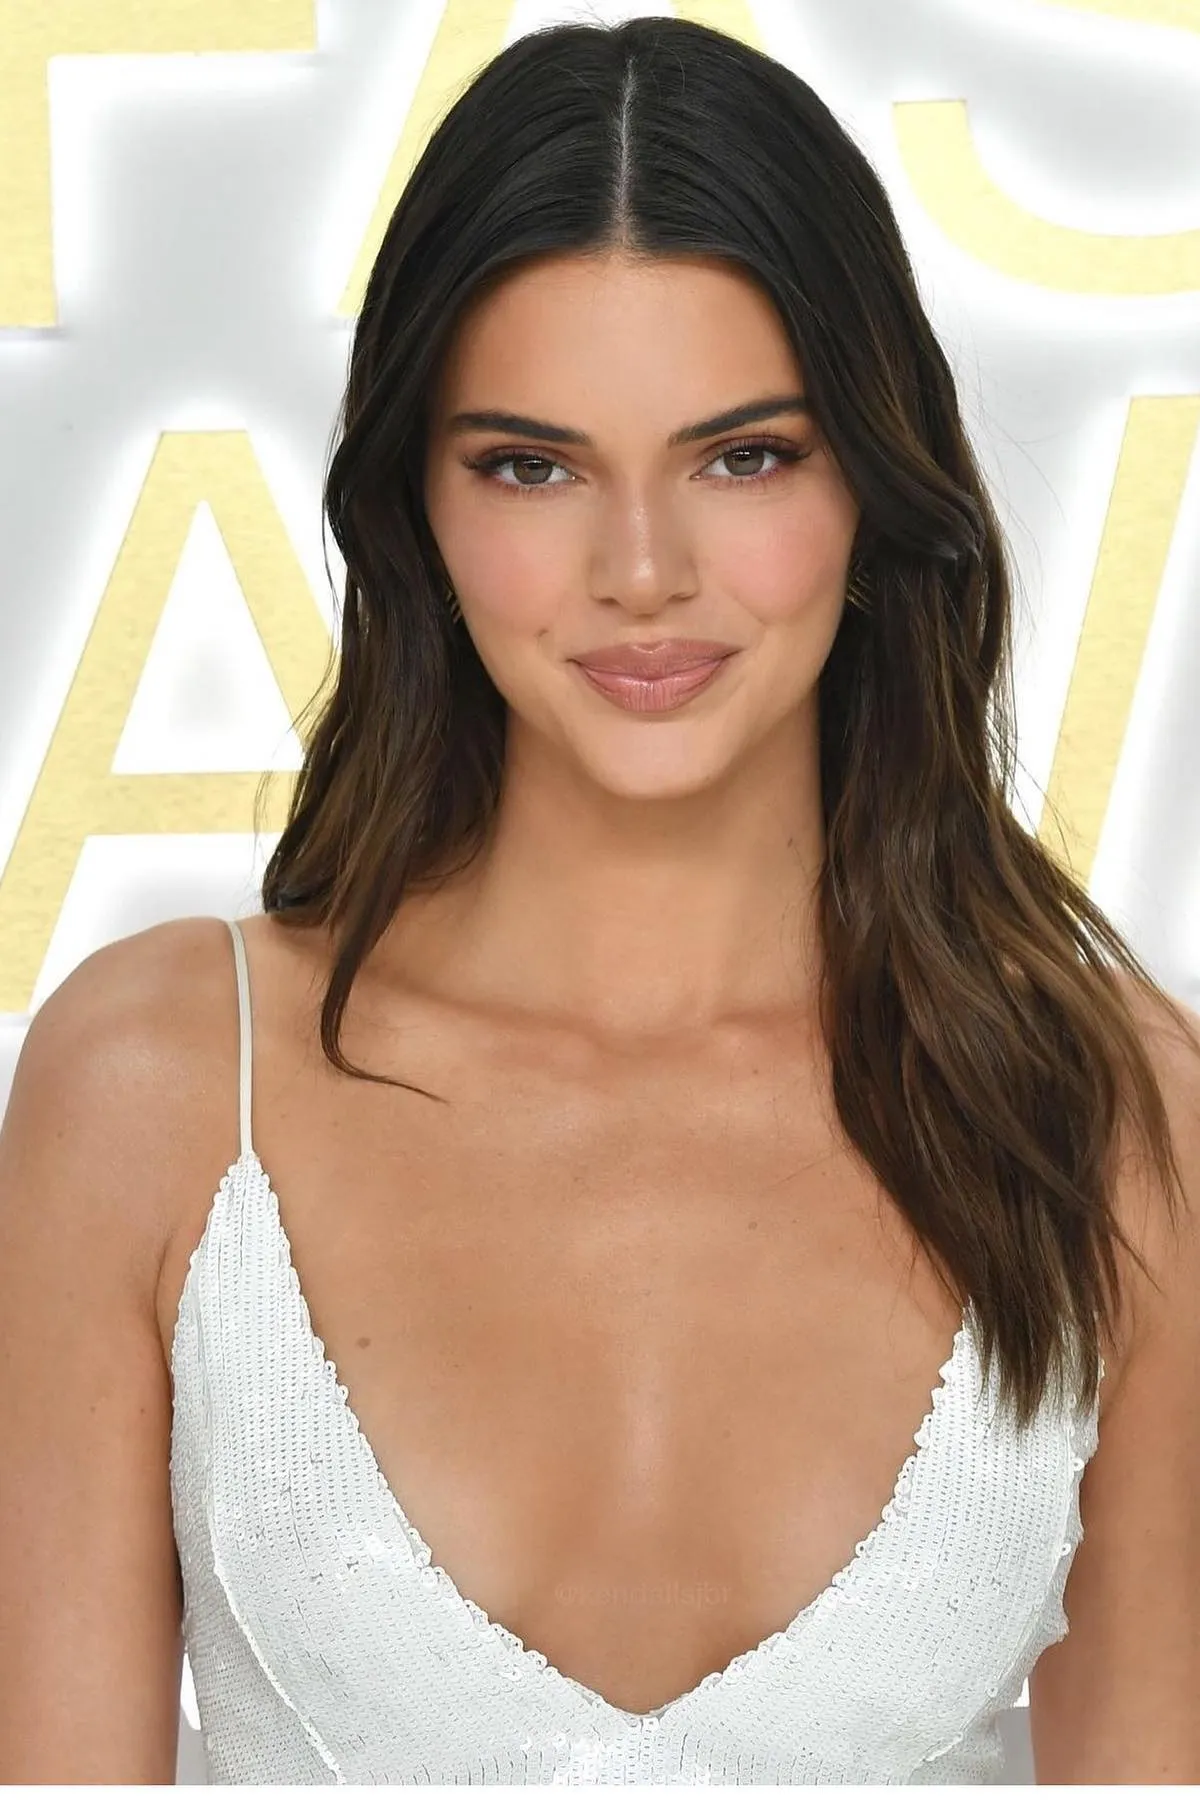 Kendall Jenner Plastic Surgery Journey Vanity